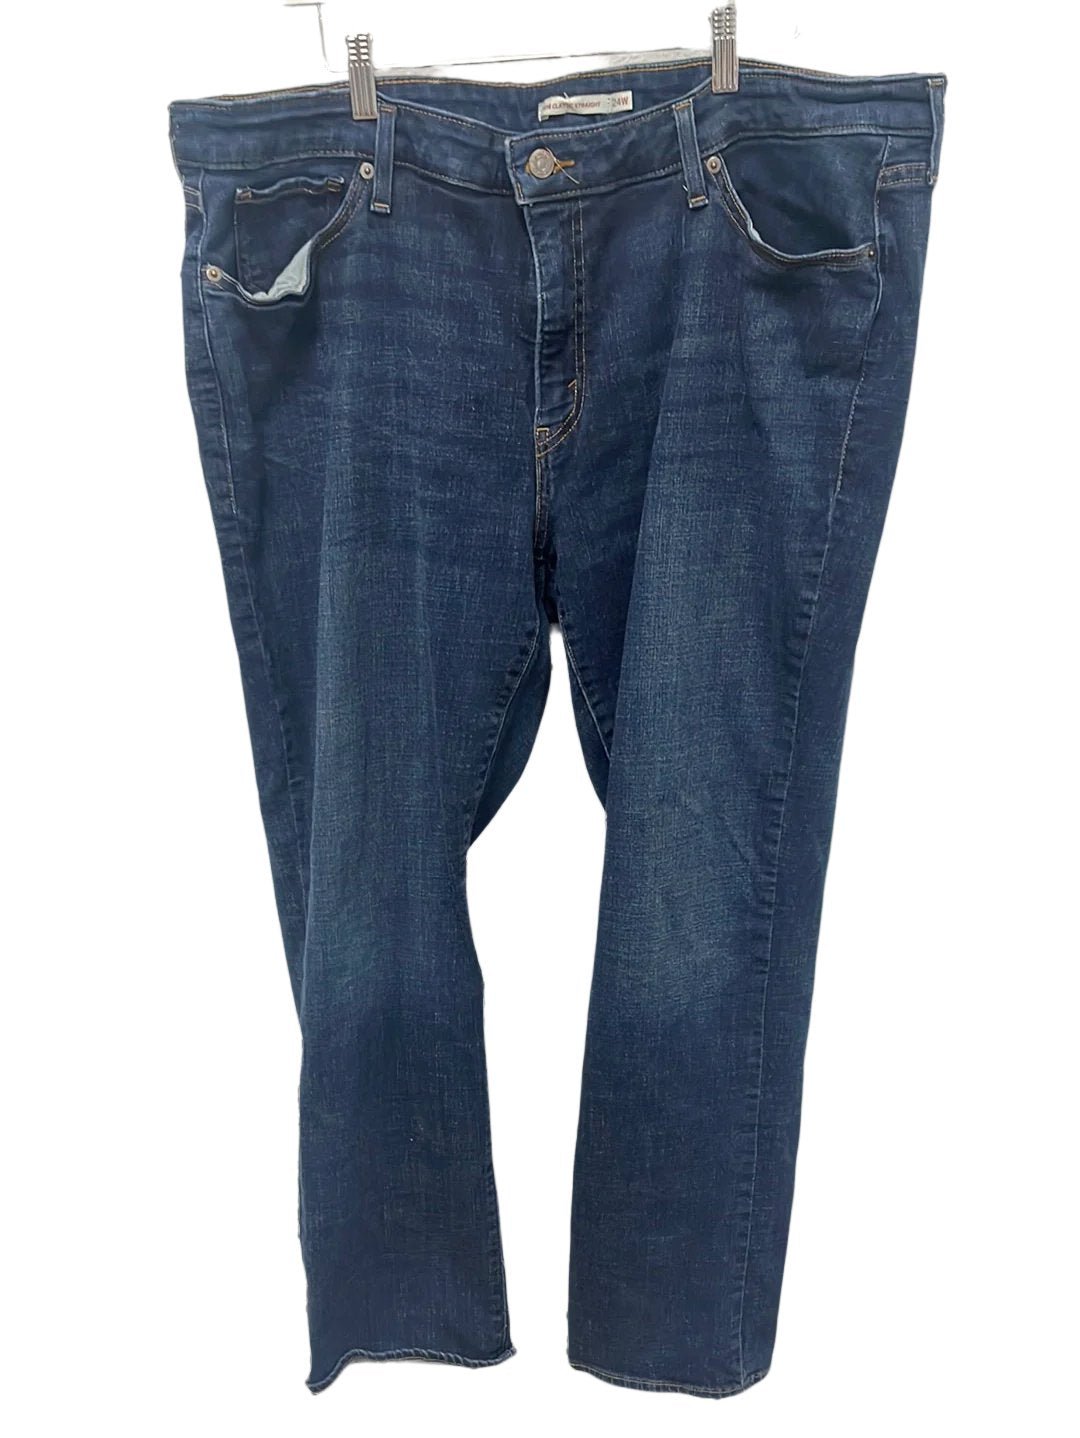 Levi's 414 Classic Straight Leg Jeans - Size 24W